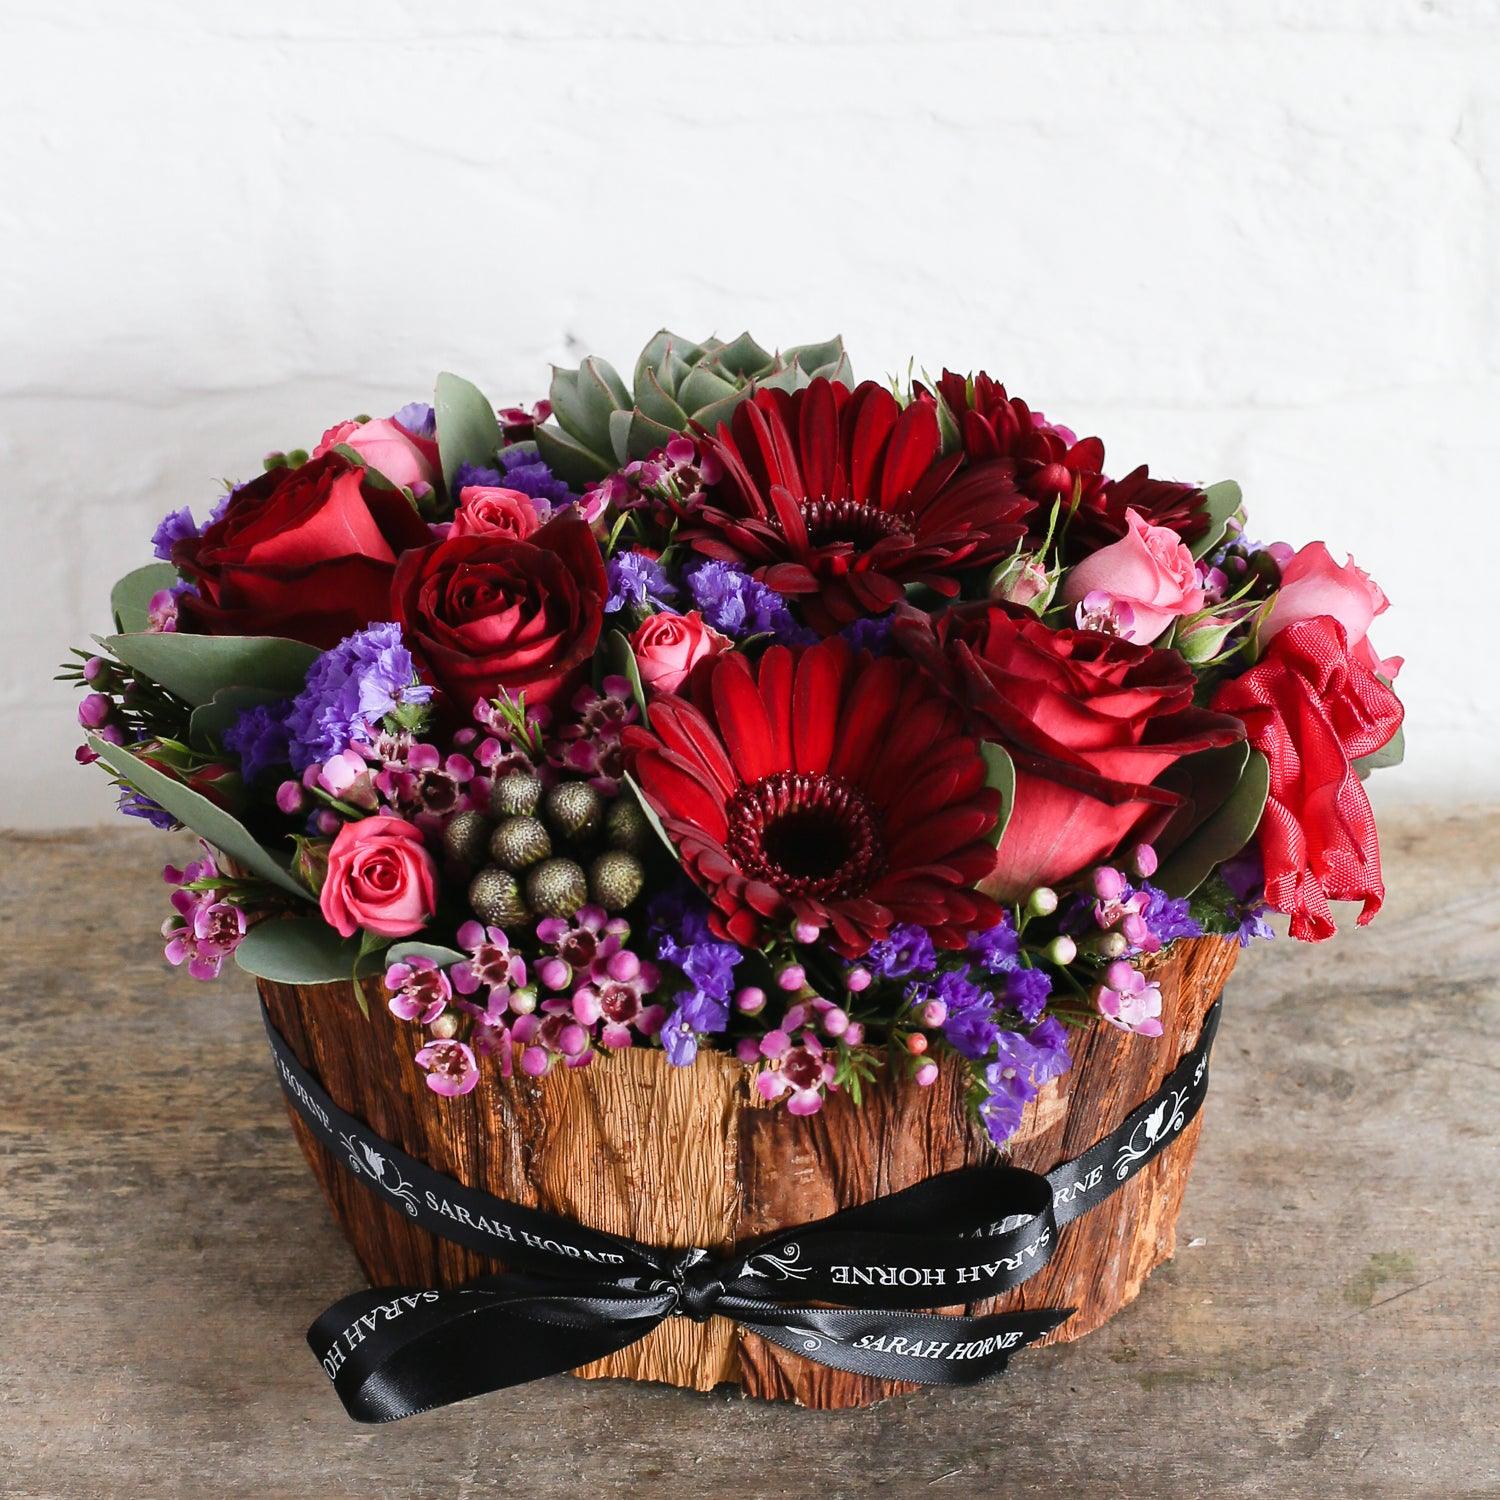 Red and purple flower arrangement